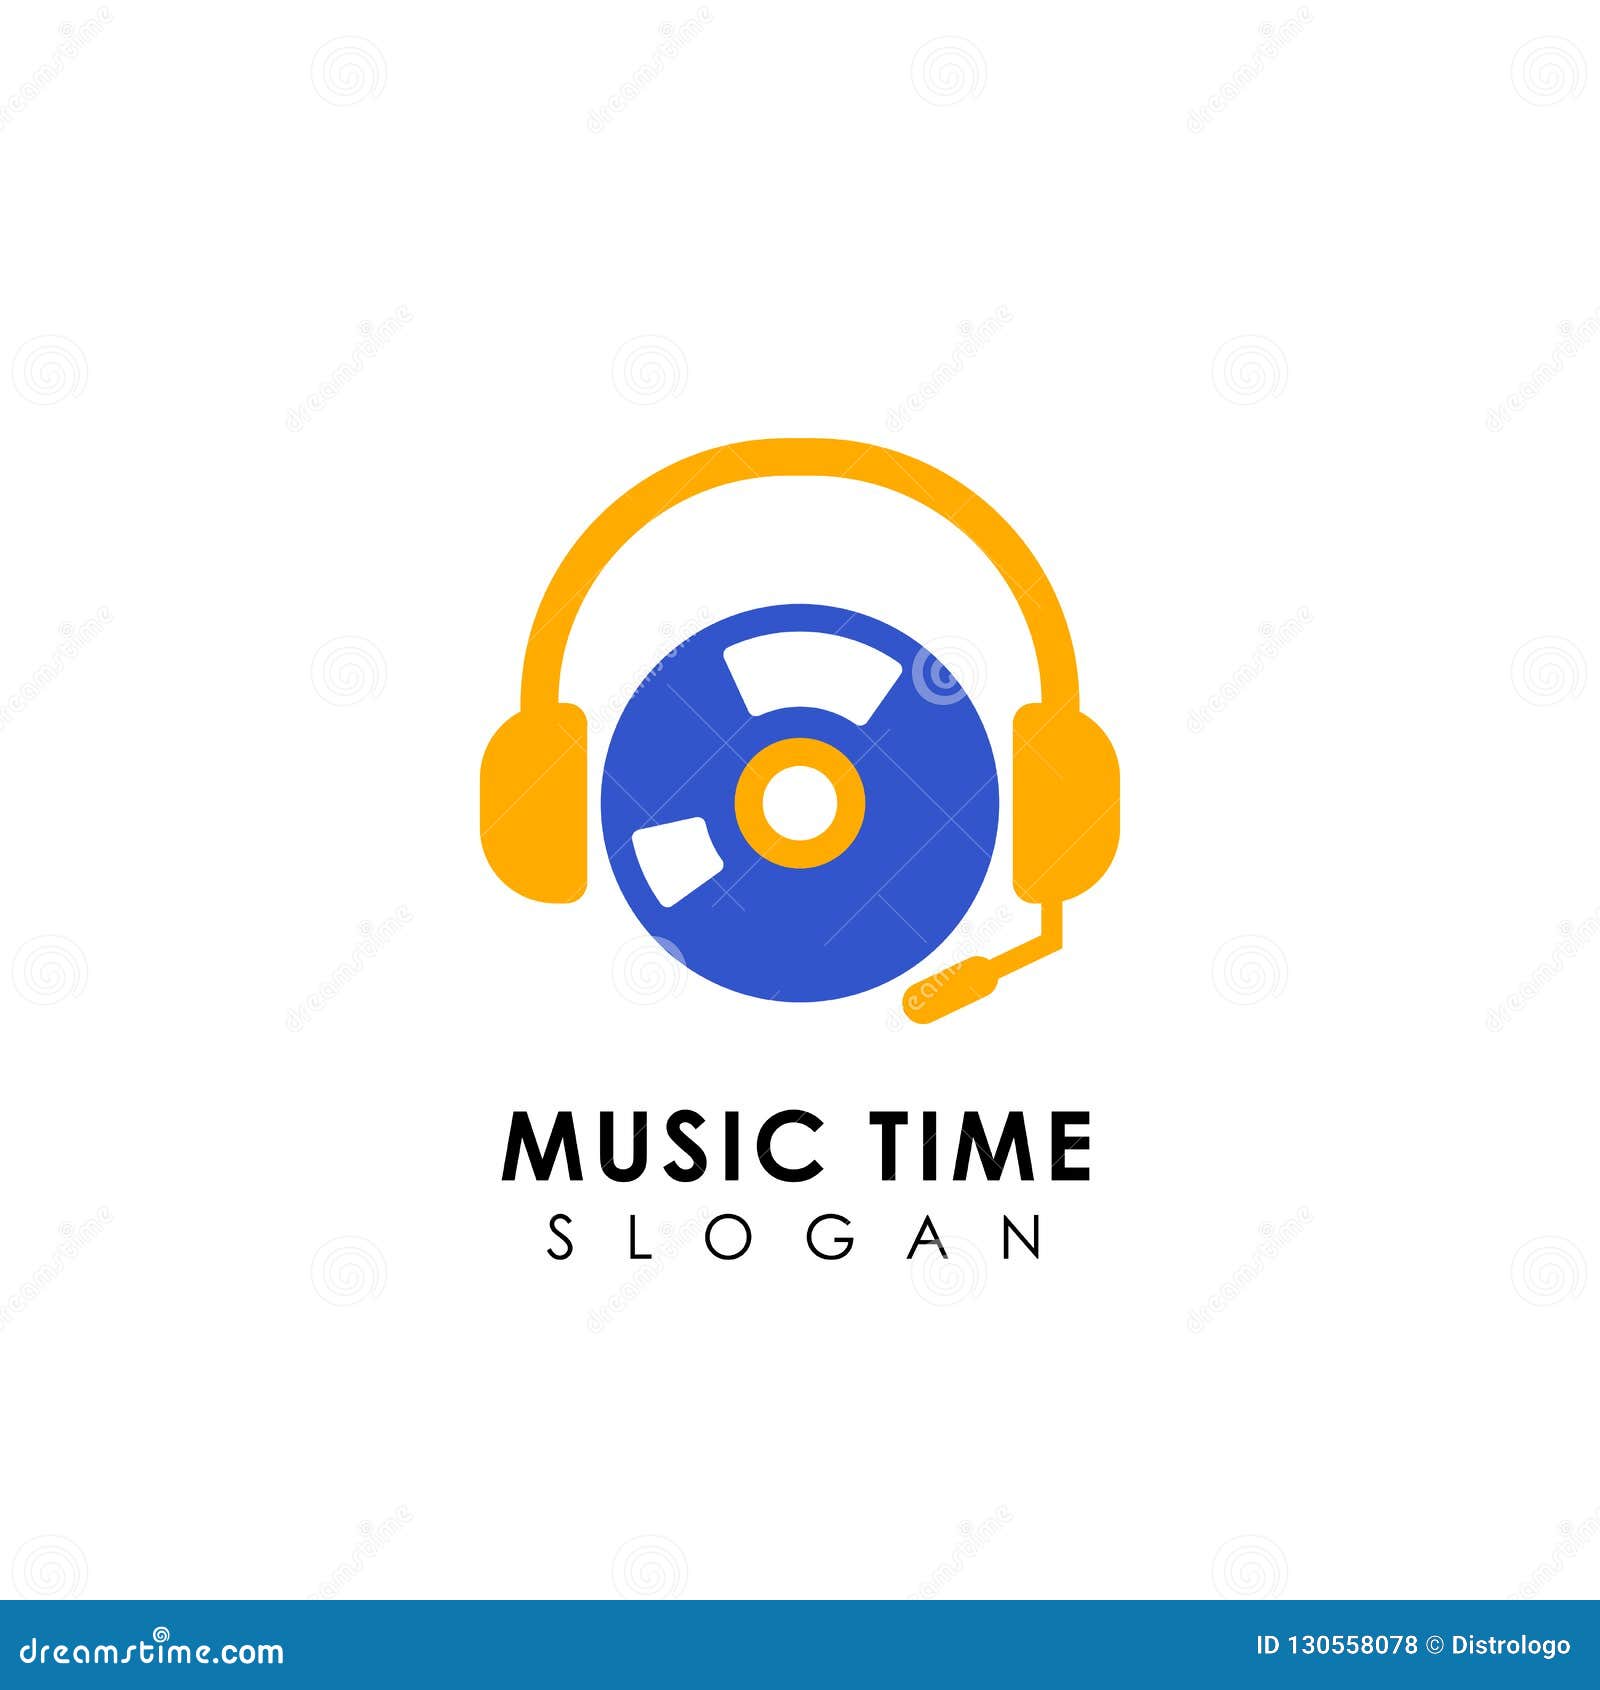 Music Logo Design With Headphone And Vinyl Illustration Dj Logo